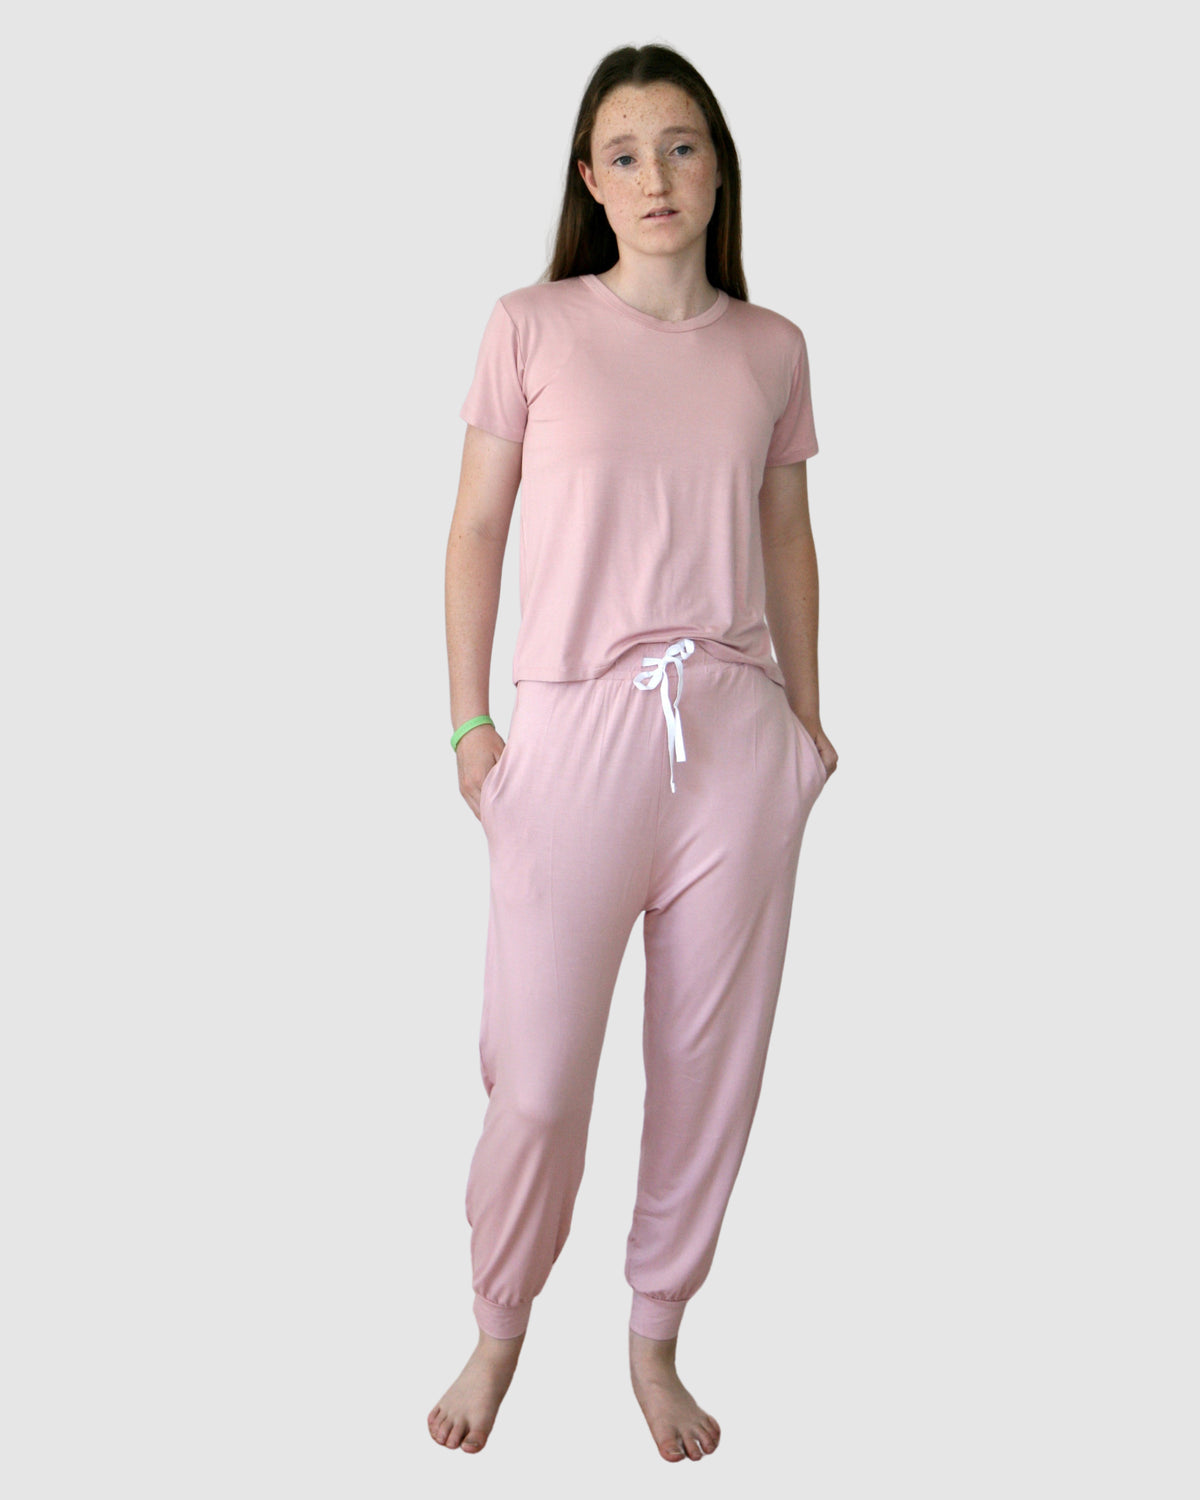 pink teen girls pyjamas set long pants and short sleeve top by Love Haidee Australia front